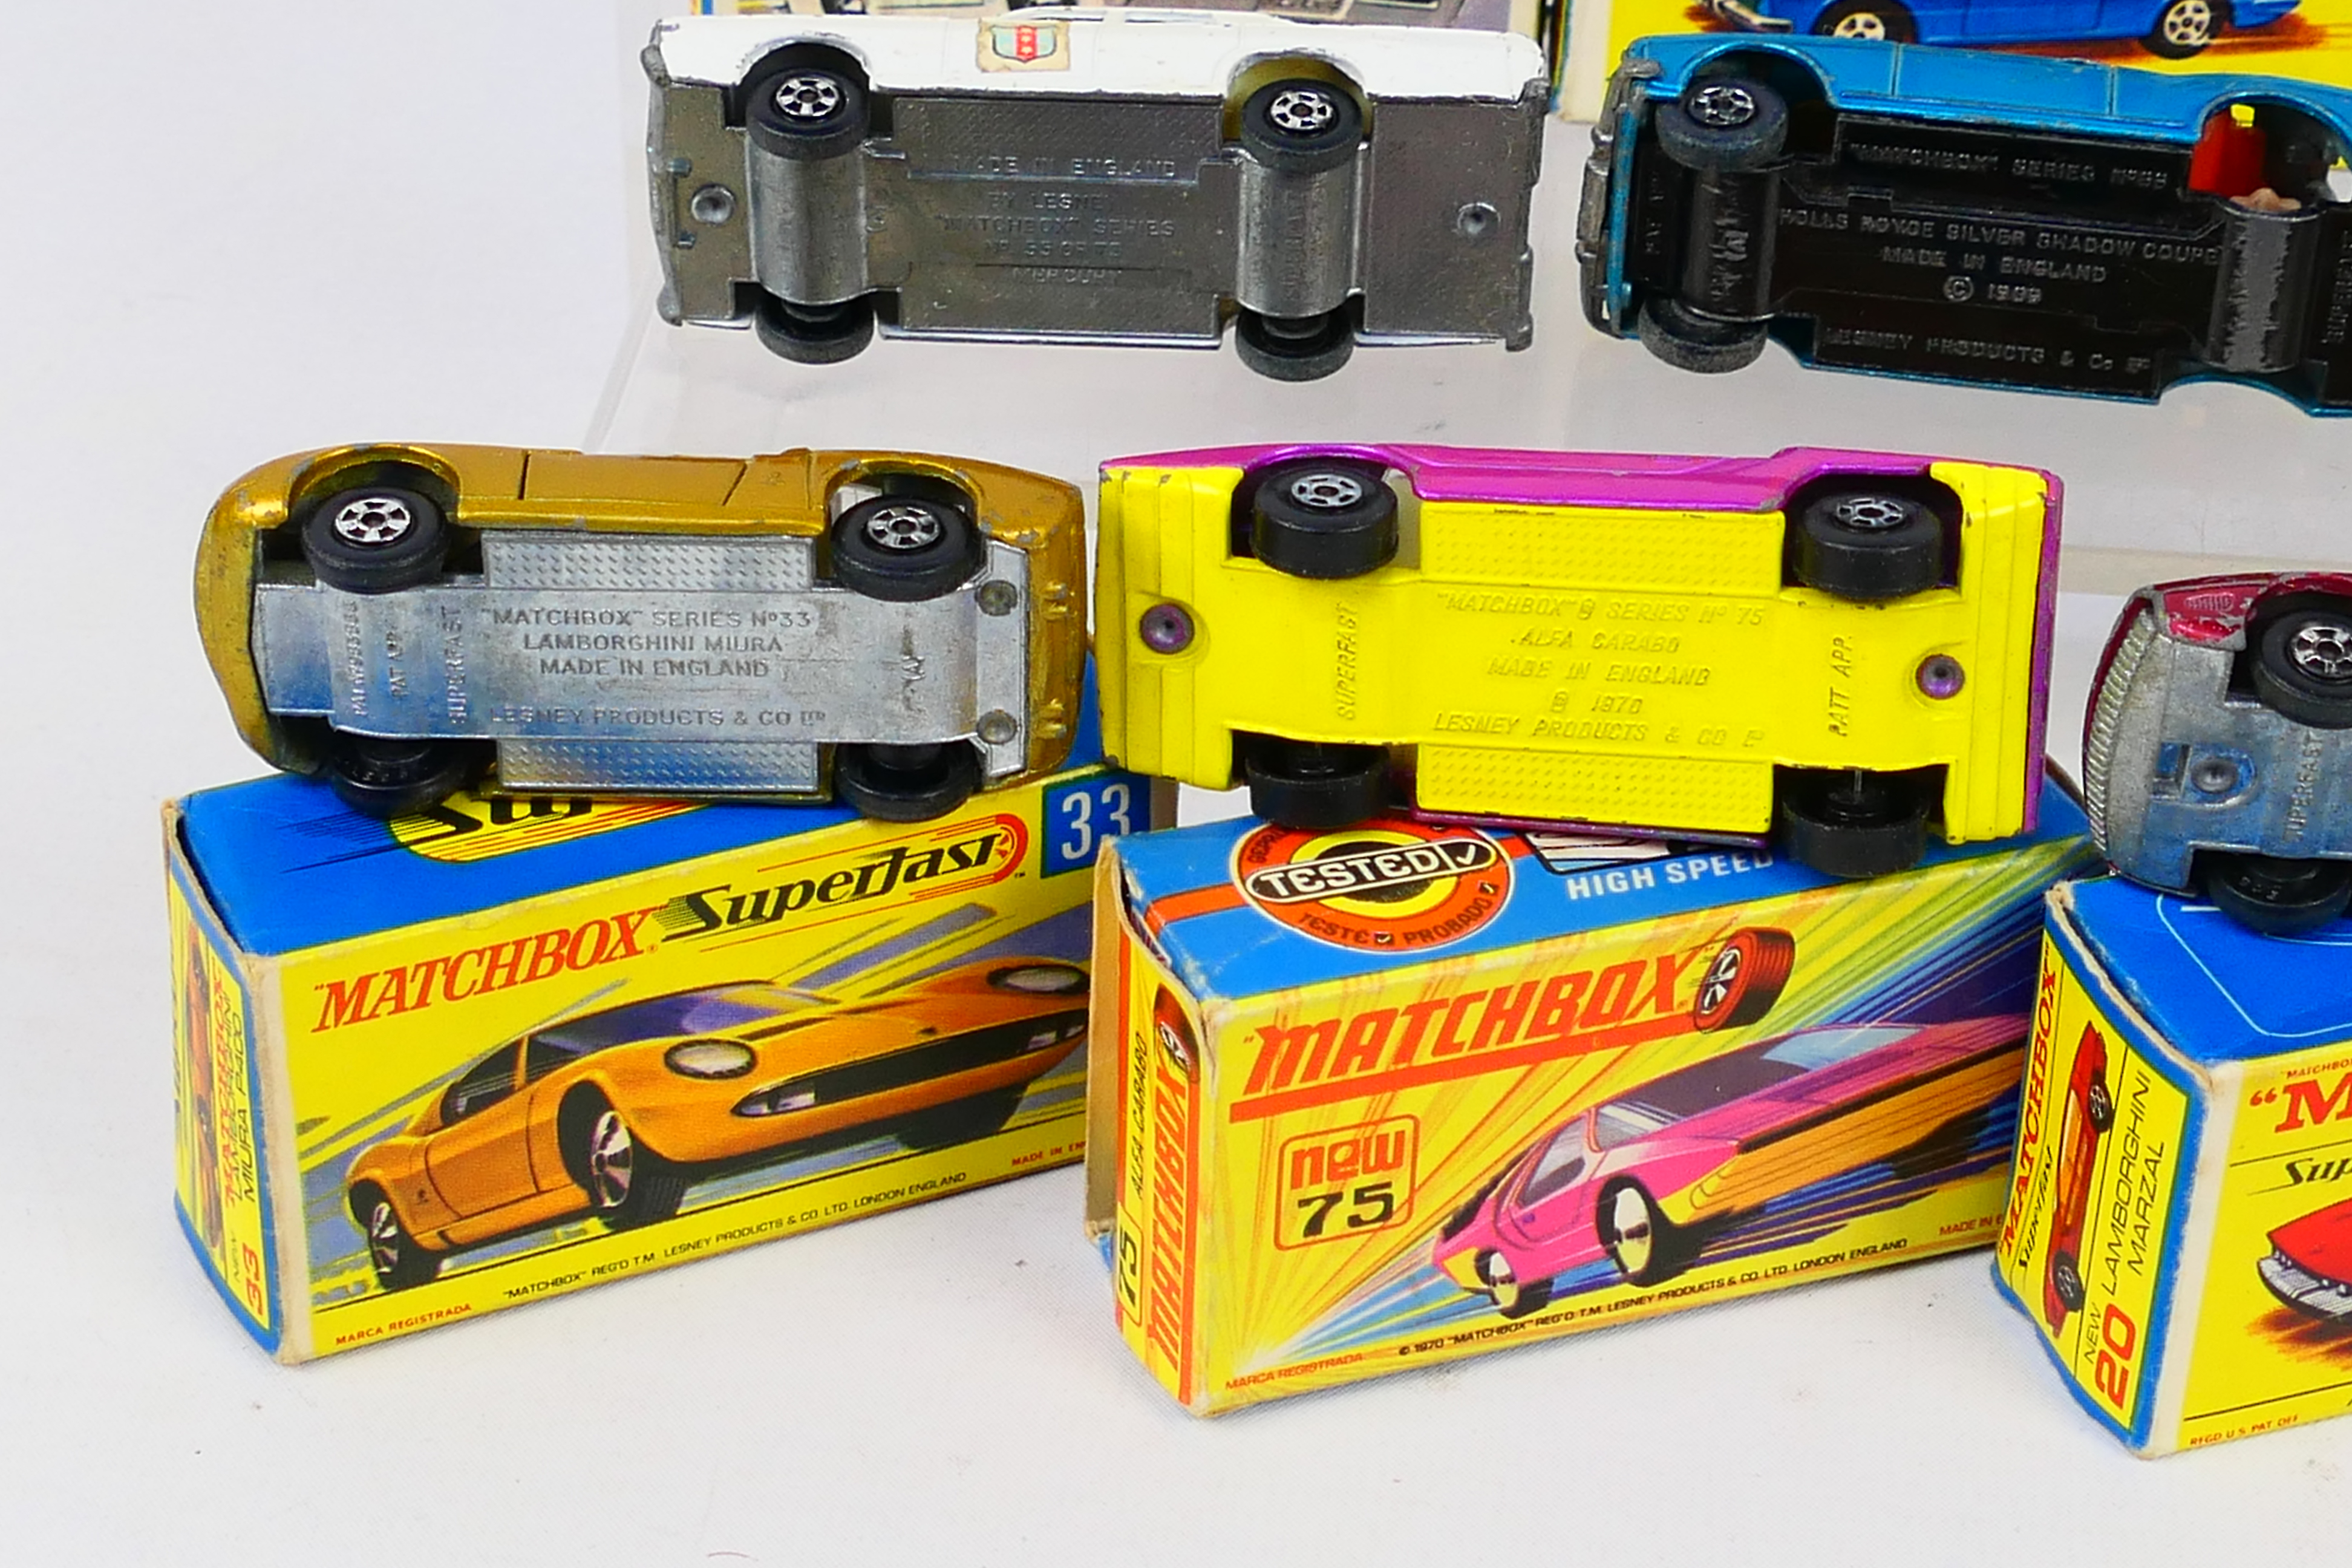 Matchbox - Superfast - 10 x boxed models including, Lamborghini Miura # 33, Ferrari Berlinetta # 75, - Image 9 of 10